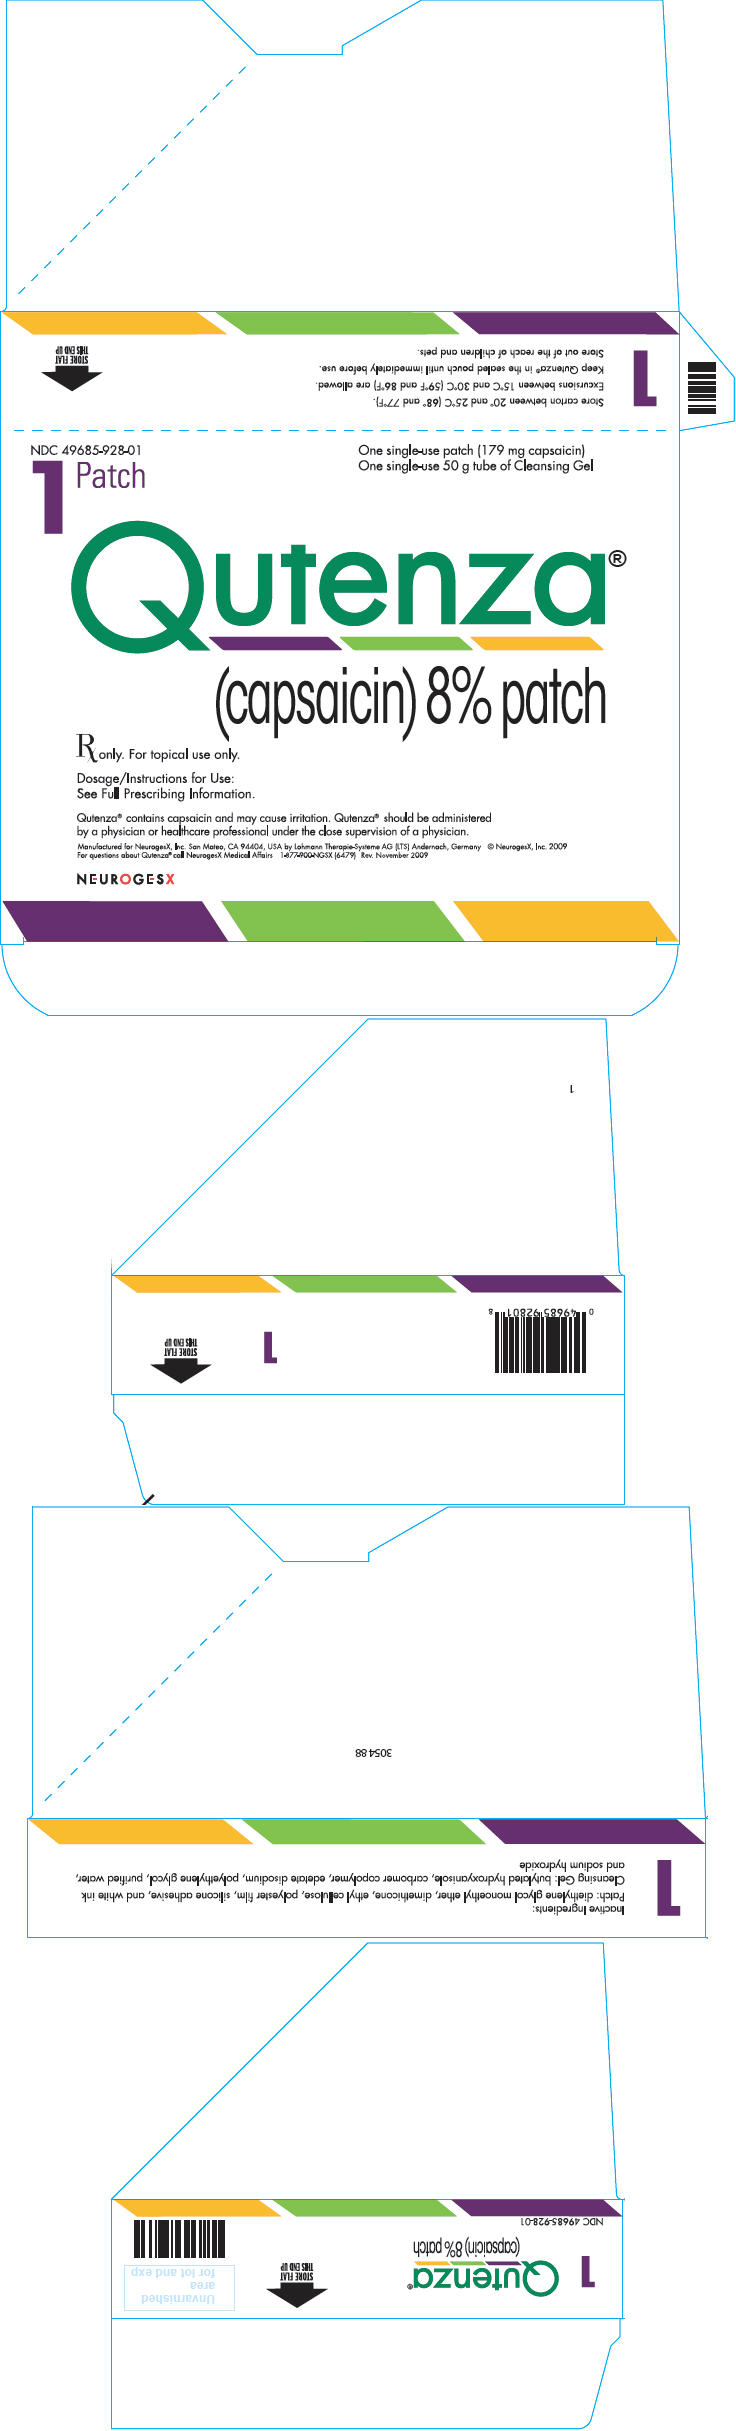 PRINCIPAL DISPLAY PANEL - 1 Pouch Kit Carton